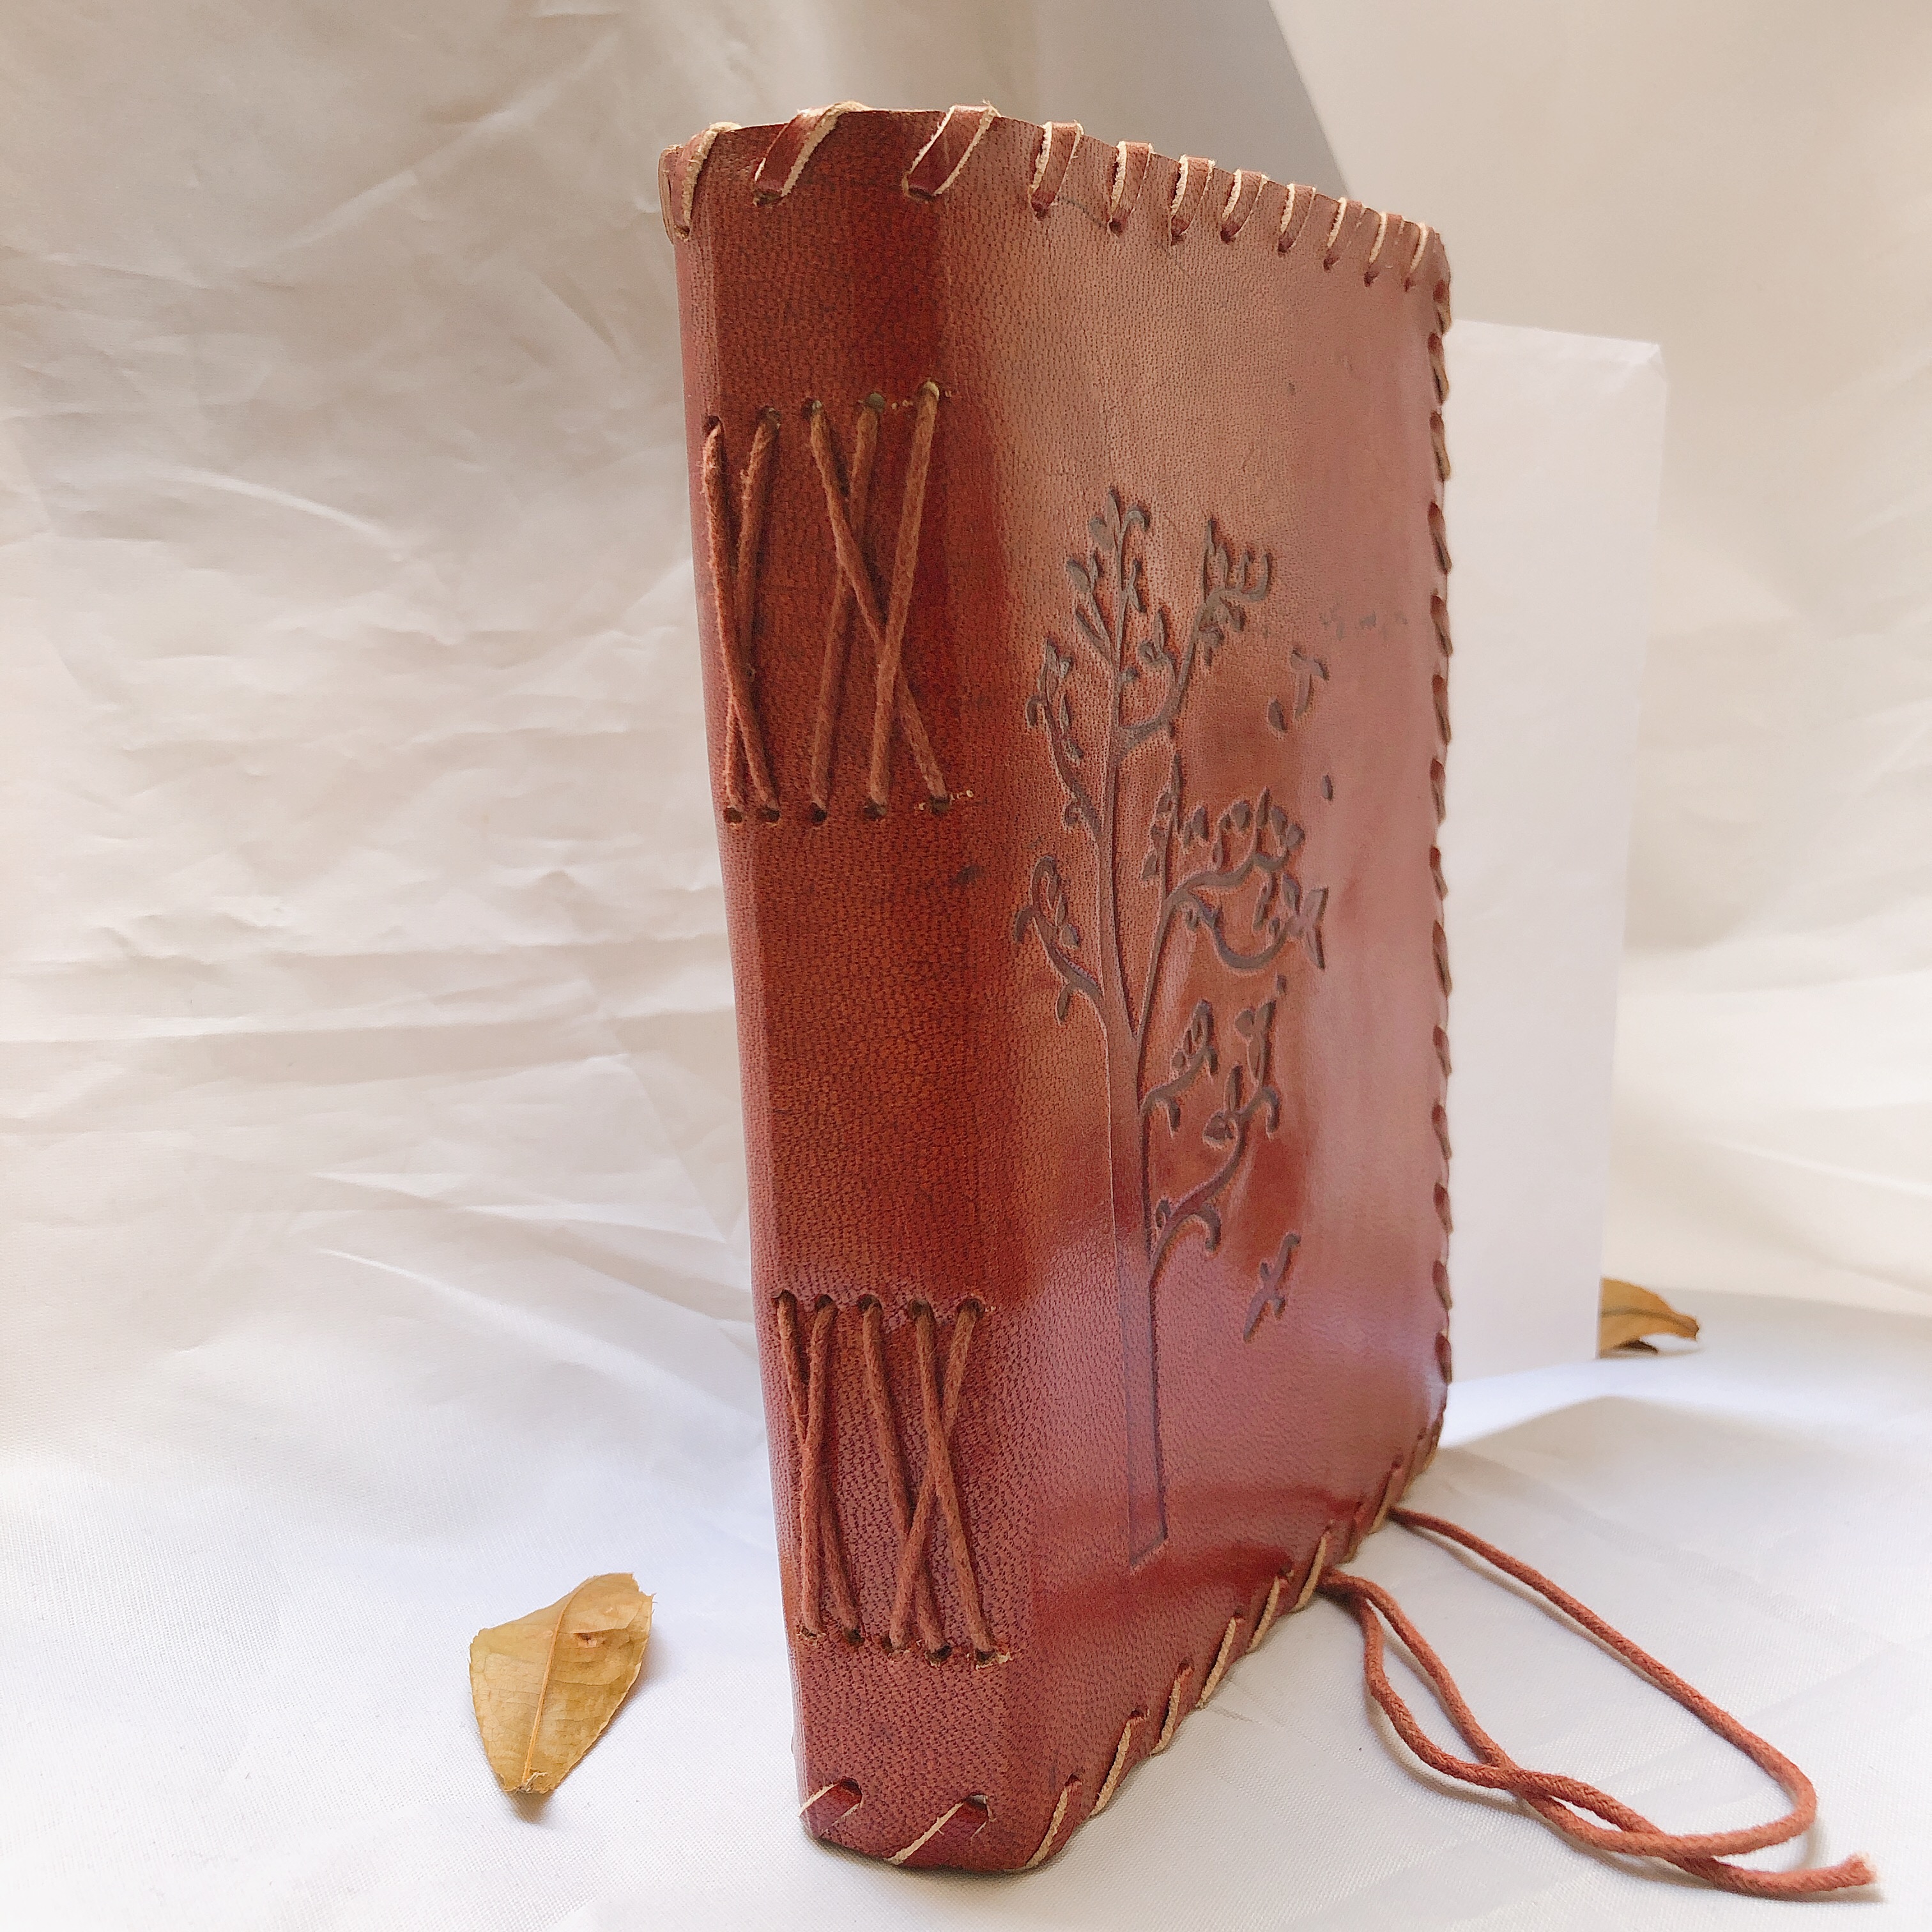 Sổ tay handmade bìa da thật hình Tree of life - Sketchbook- Handmade leather journal